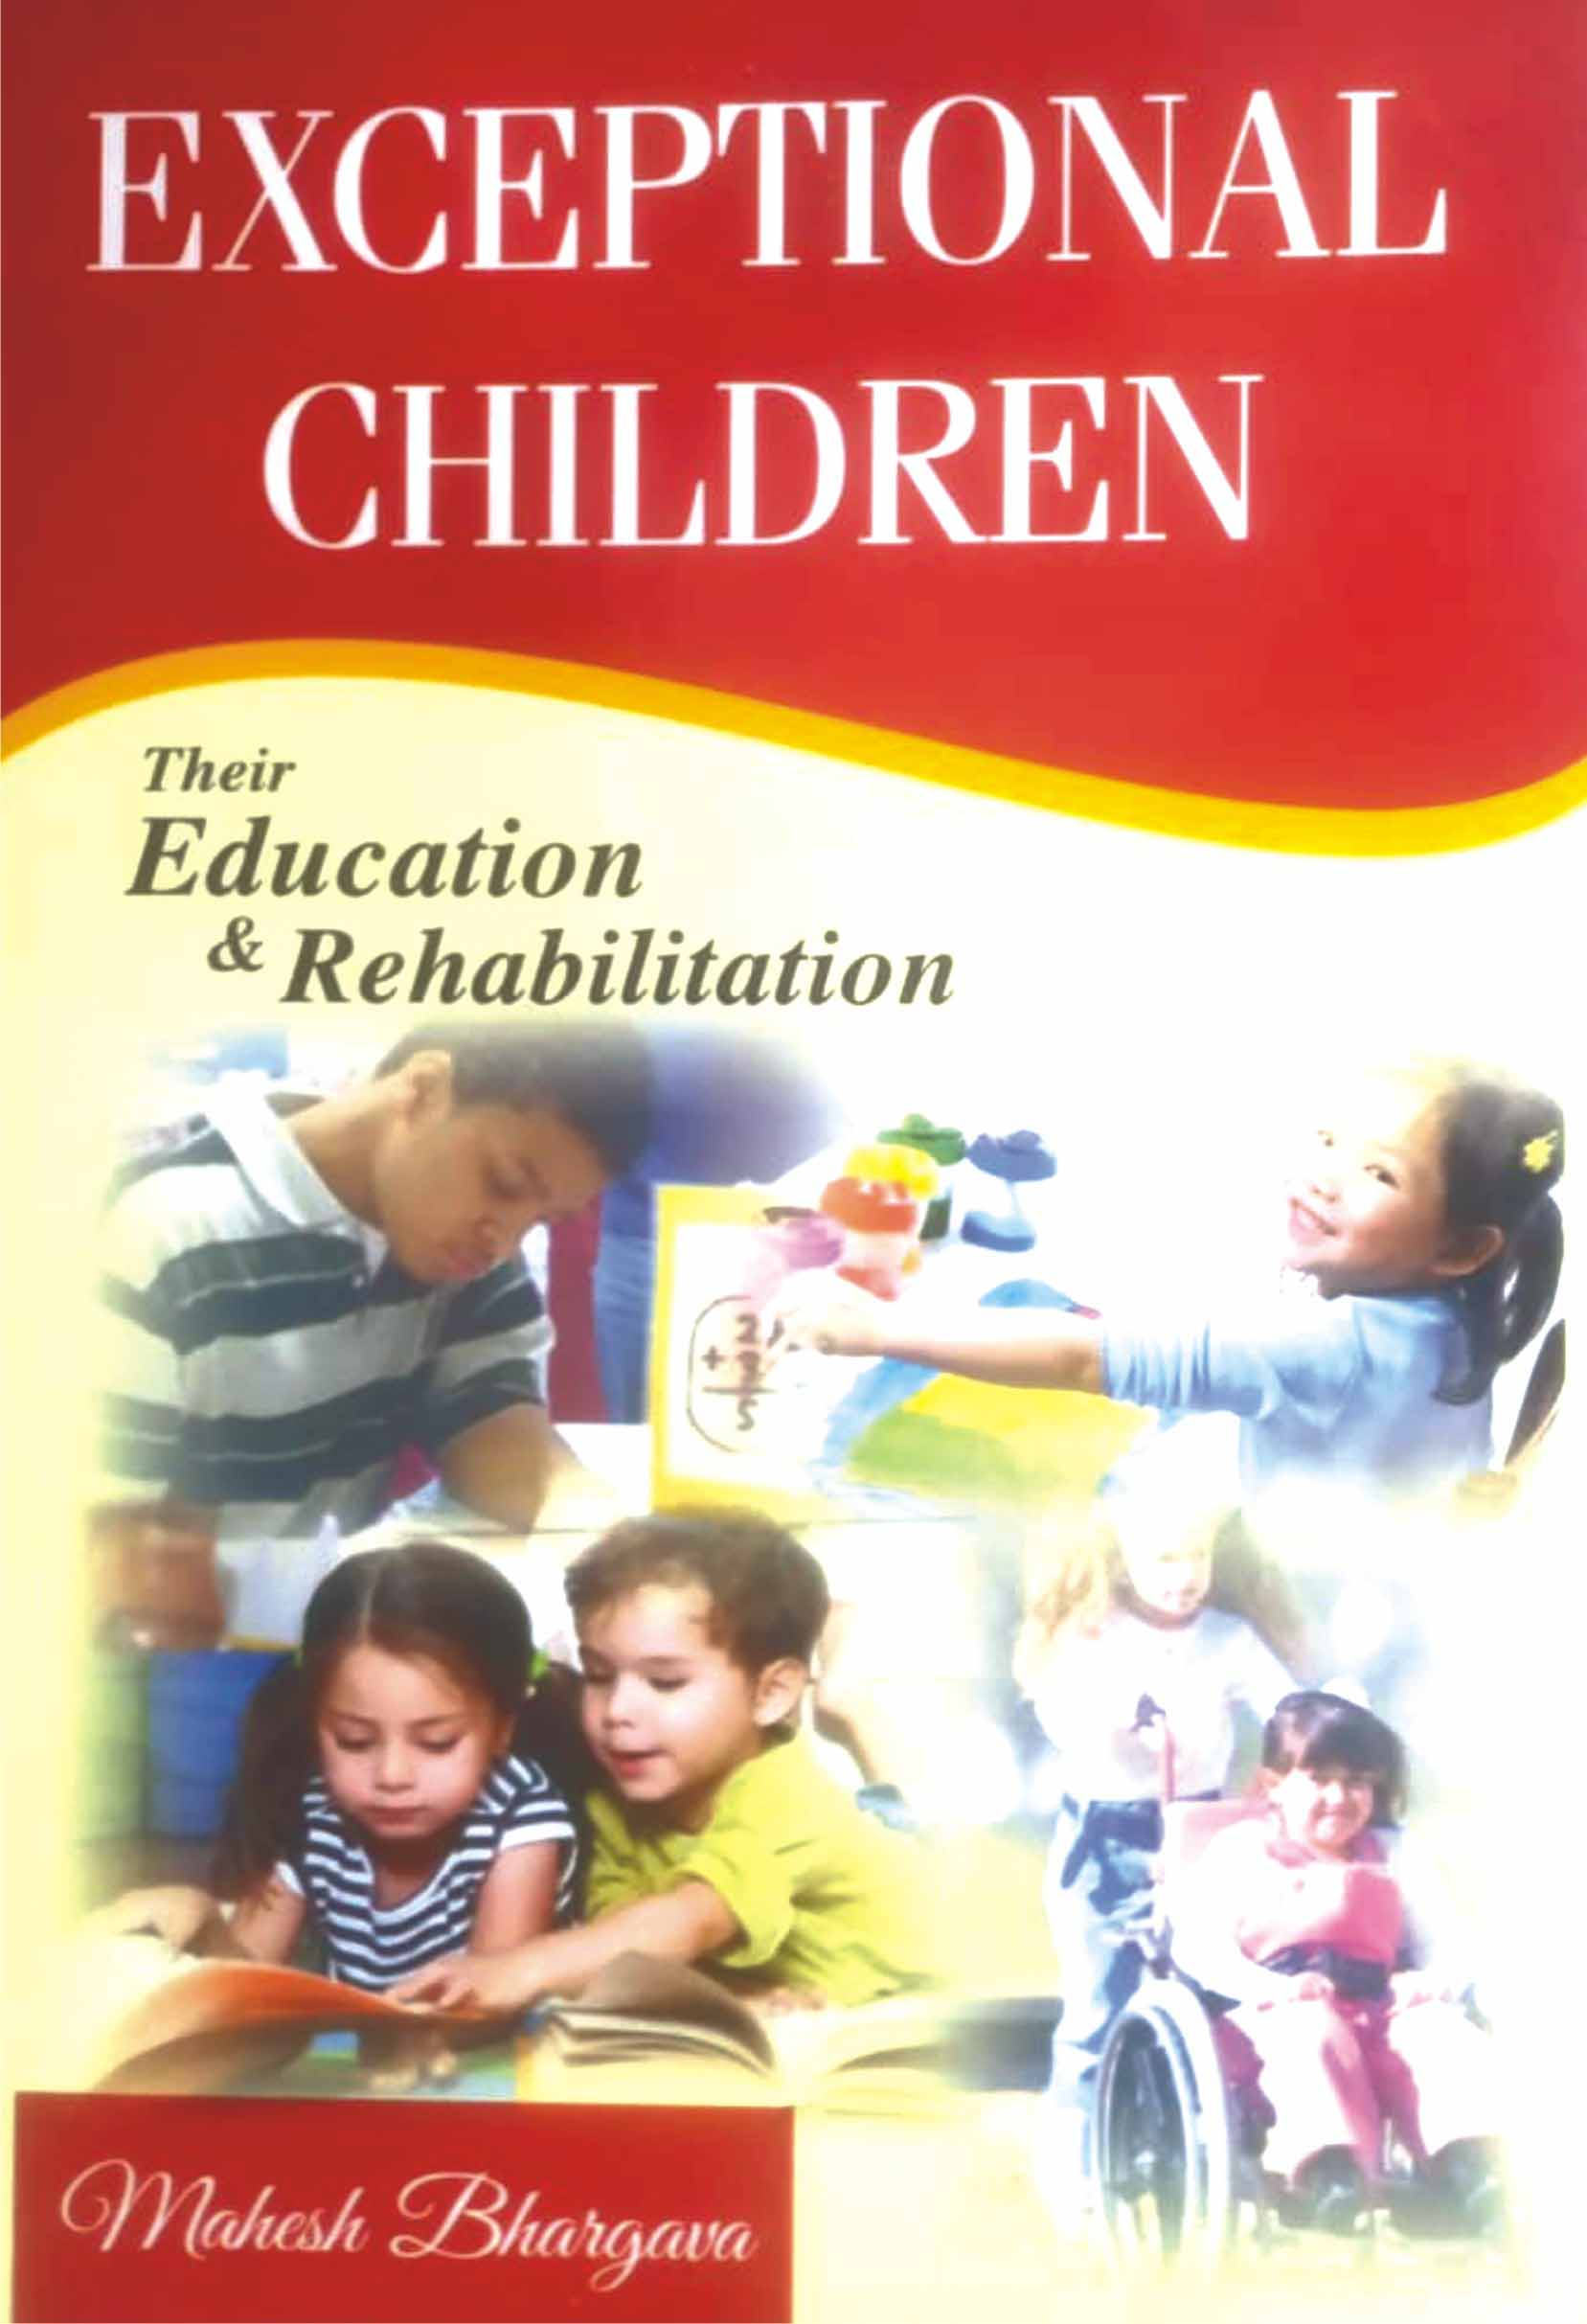 EXCEPTIONAL-CHILDREN-(Their-Education-Rehabilitation)